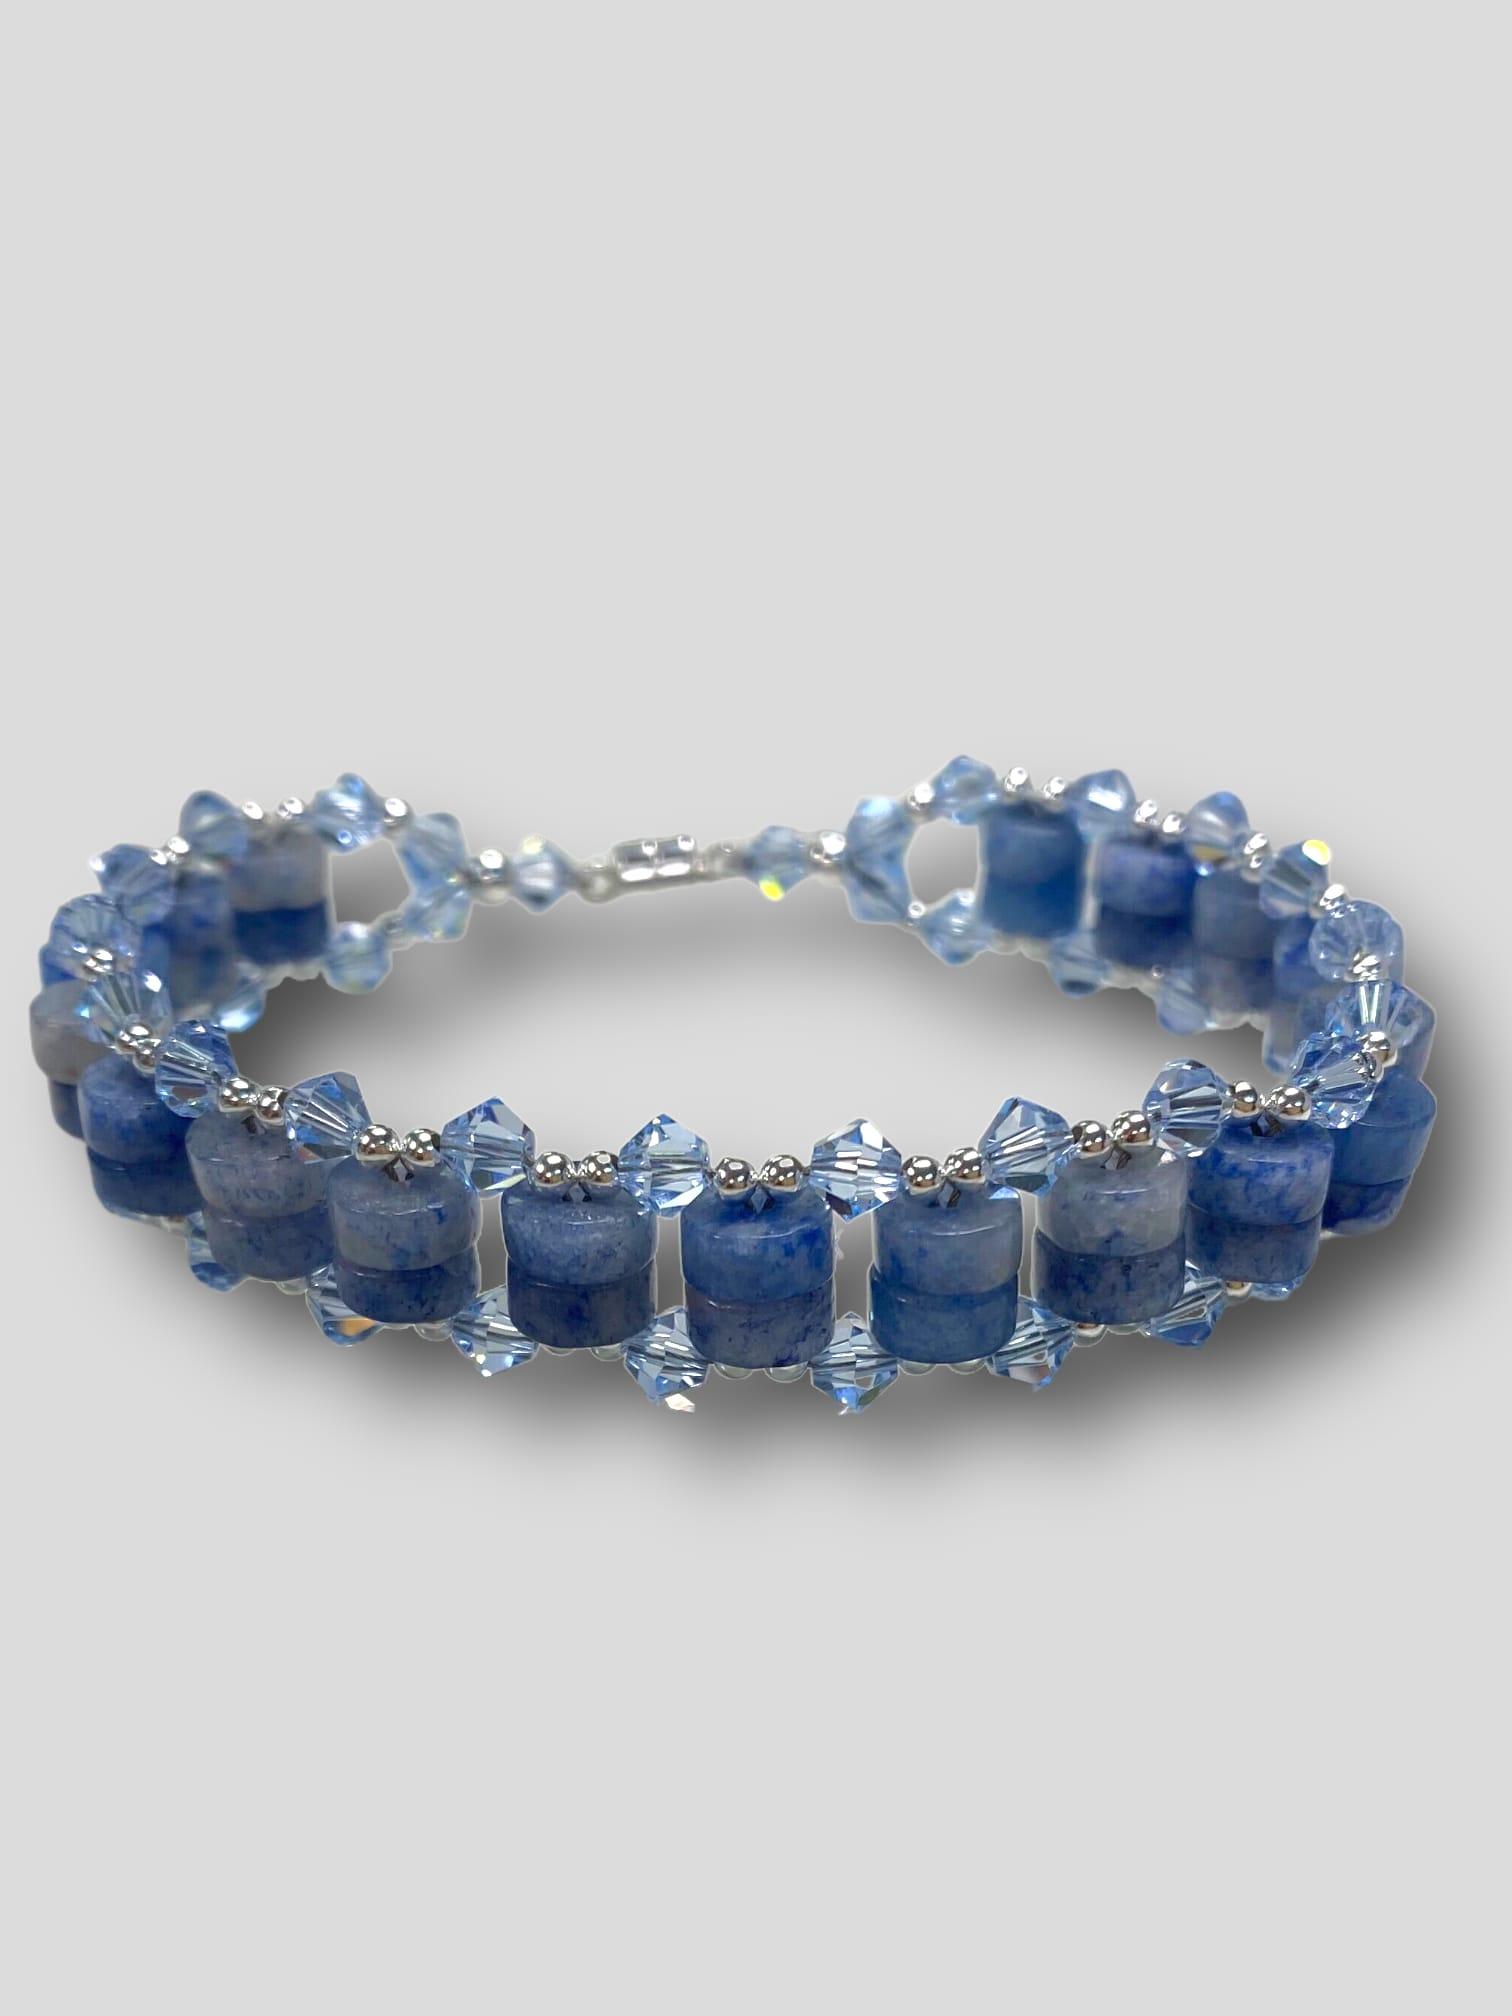 Bracelet Kit - Sparkling Gemstone Weave Bracelet - Jewelry Making Kit